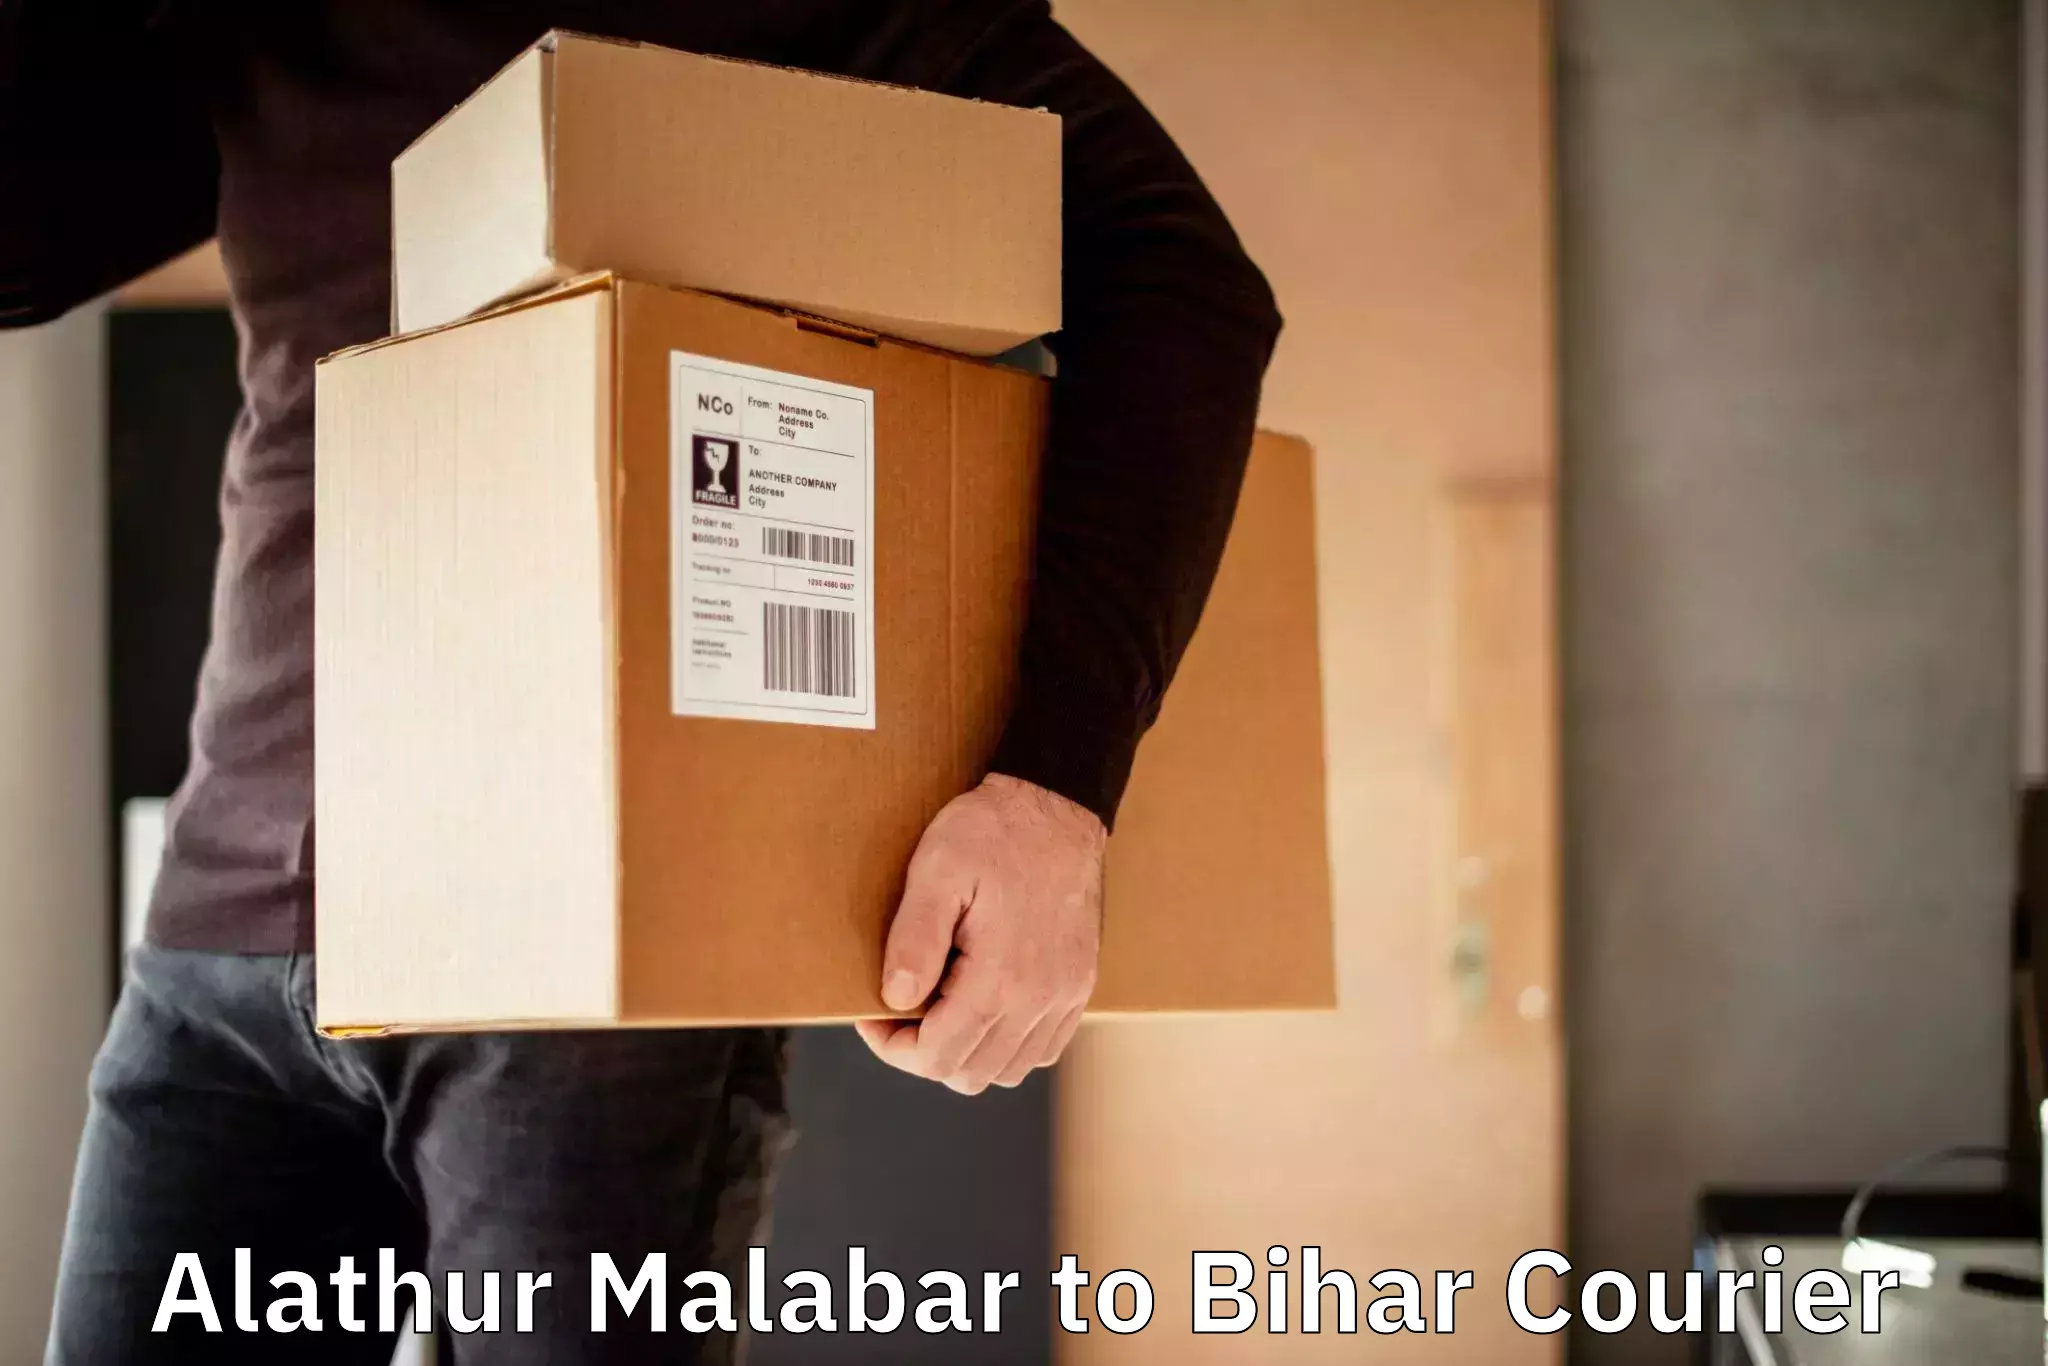 Pharmaceutical courier Alathur Malabar to Kochas